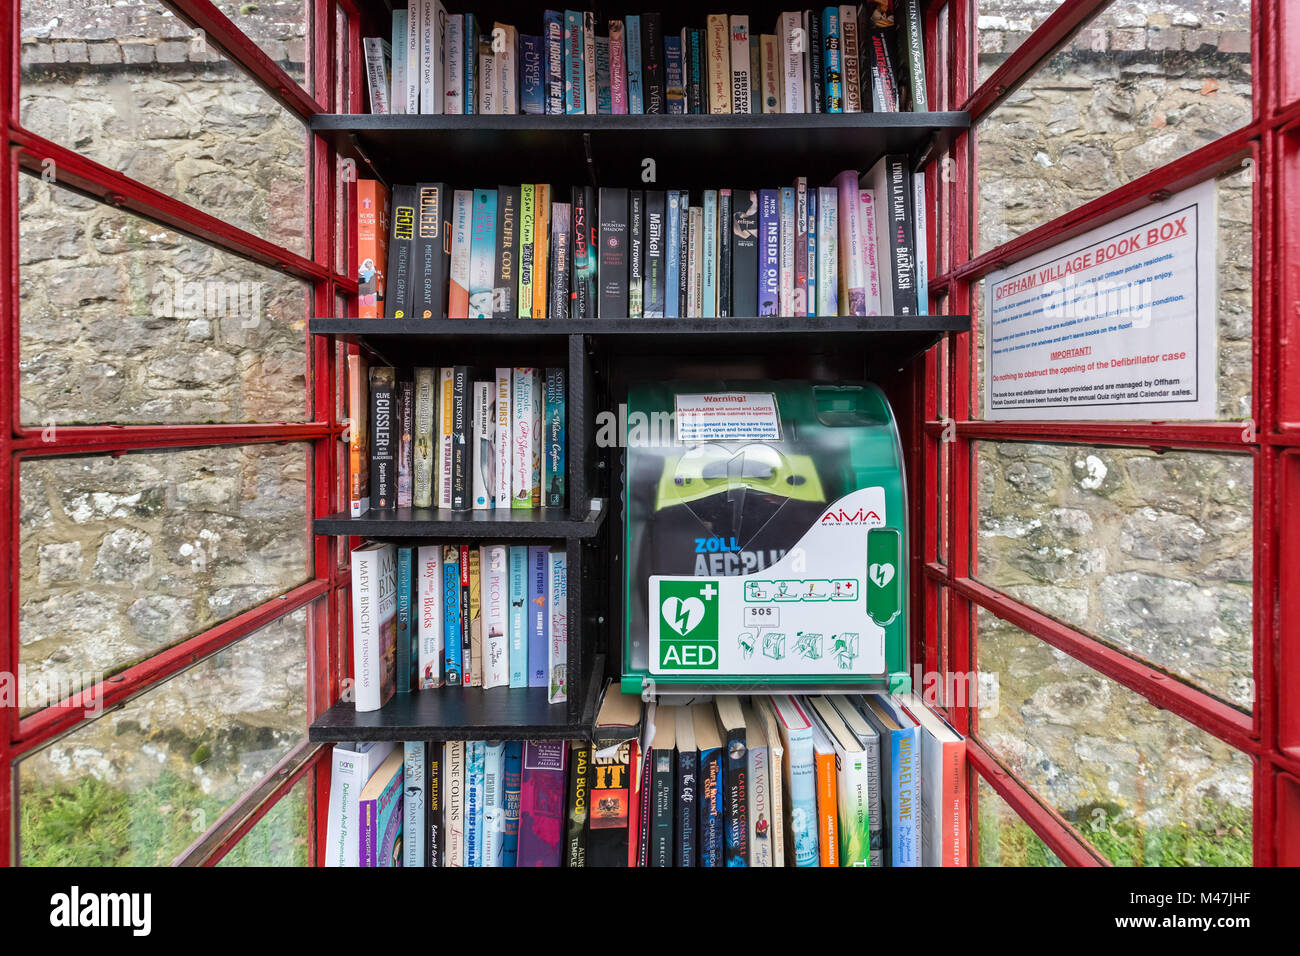 Red phone box book ‘Box Swap’ library including lifesaving defibrillator equipment in Offham, Kent. Stock Photo